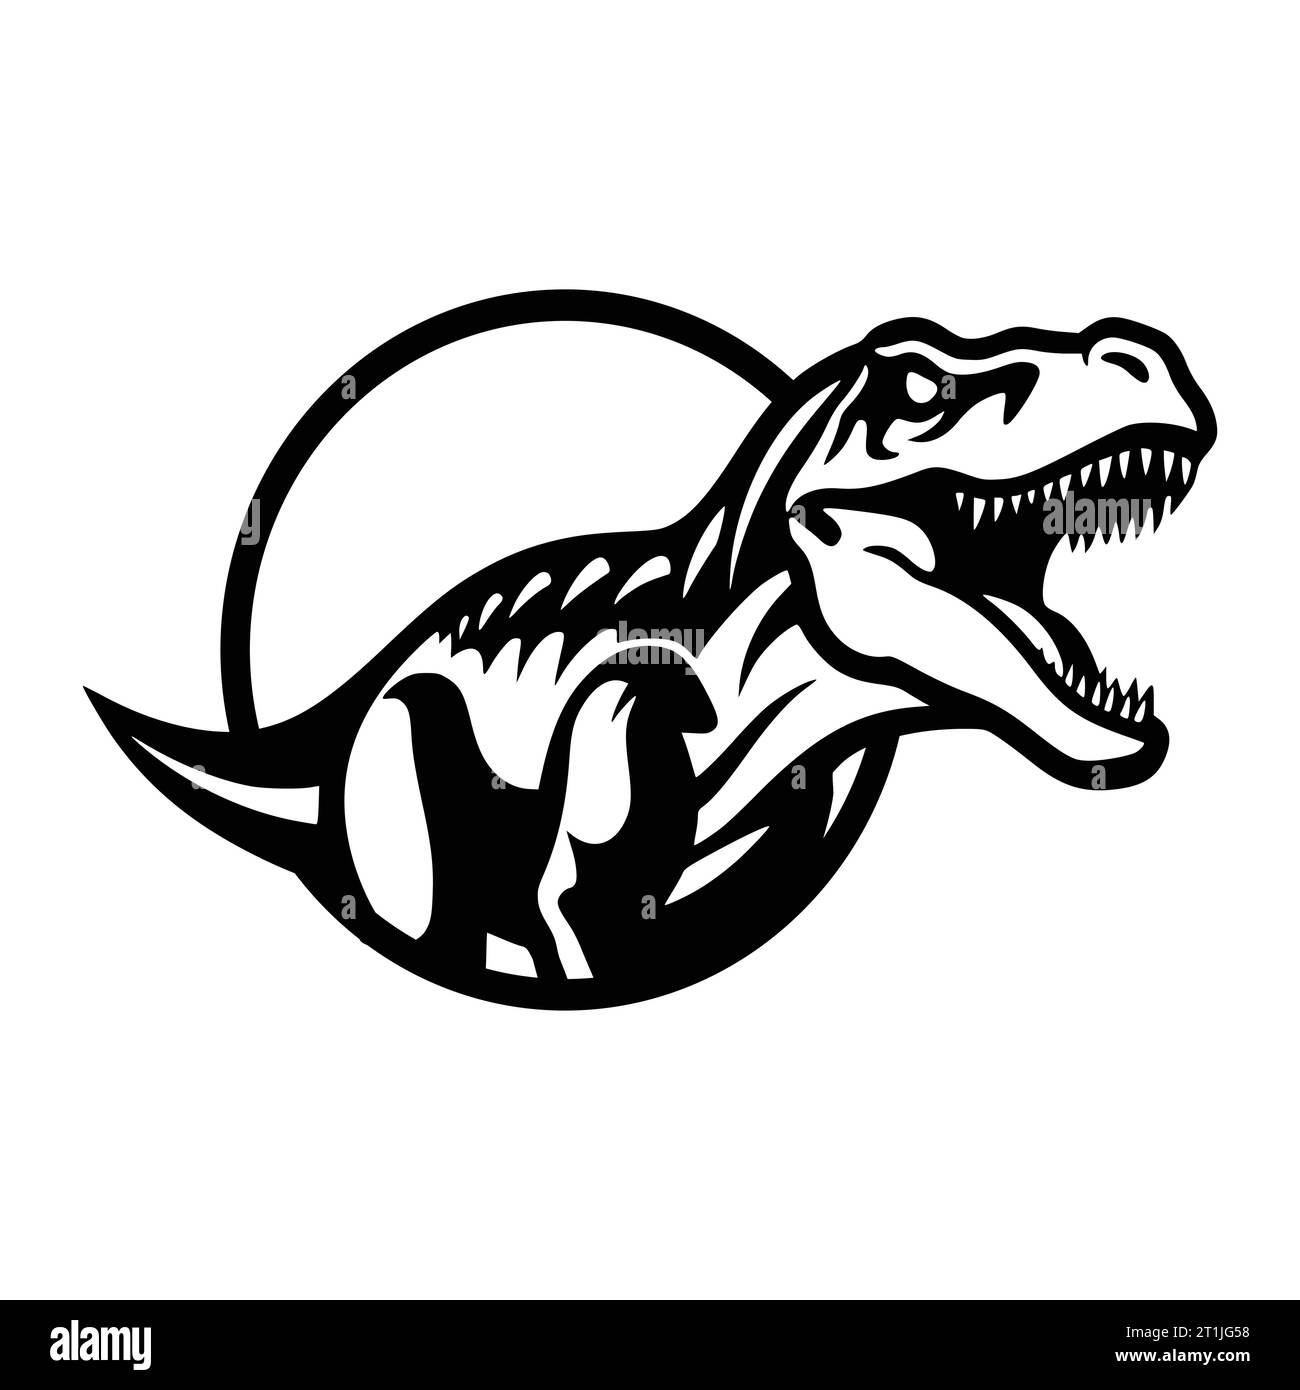 t rex dinosaur reptilian monster wild animal head illustration for logo or symbol Stock Vector